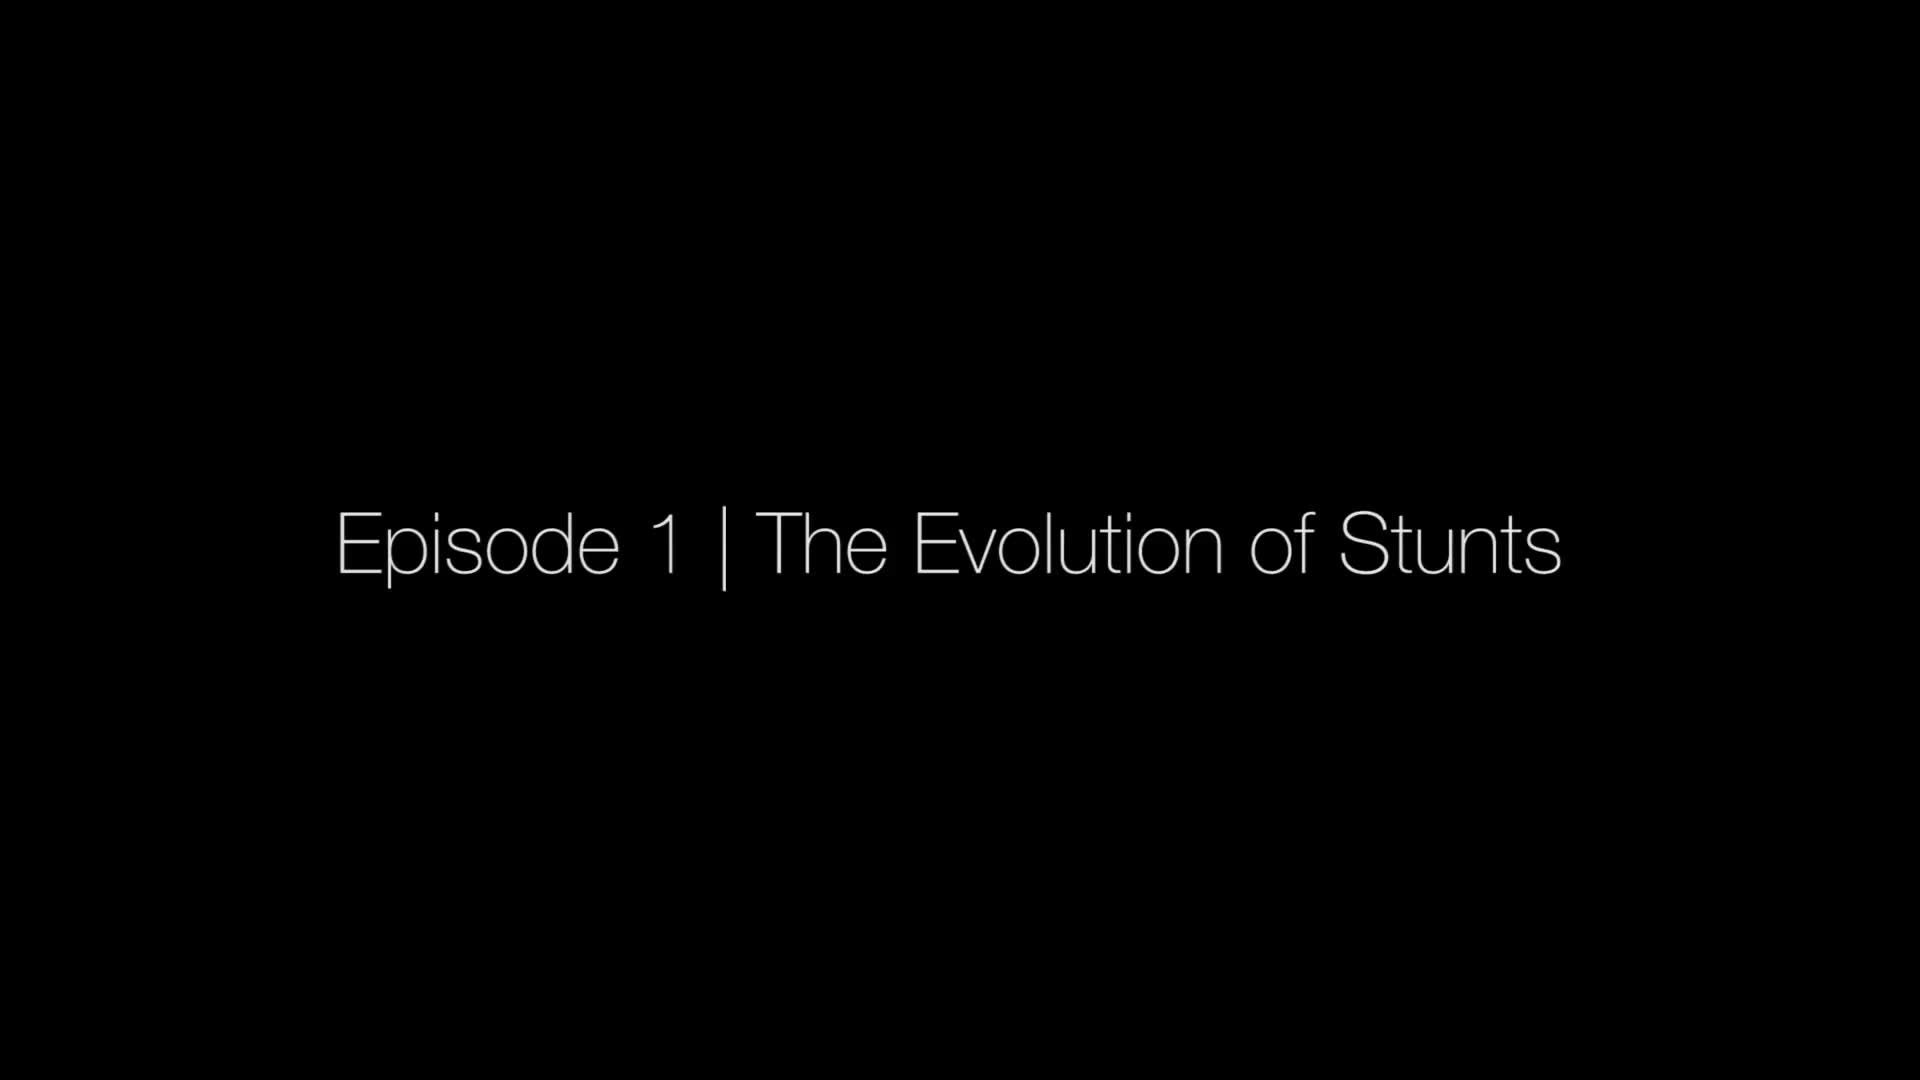 THE EVOLUTION OF STUNTS